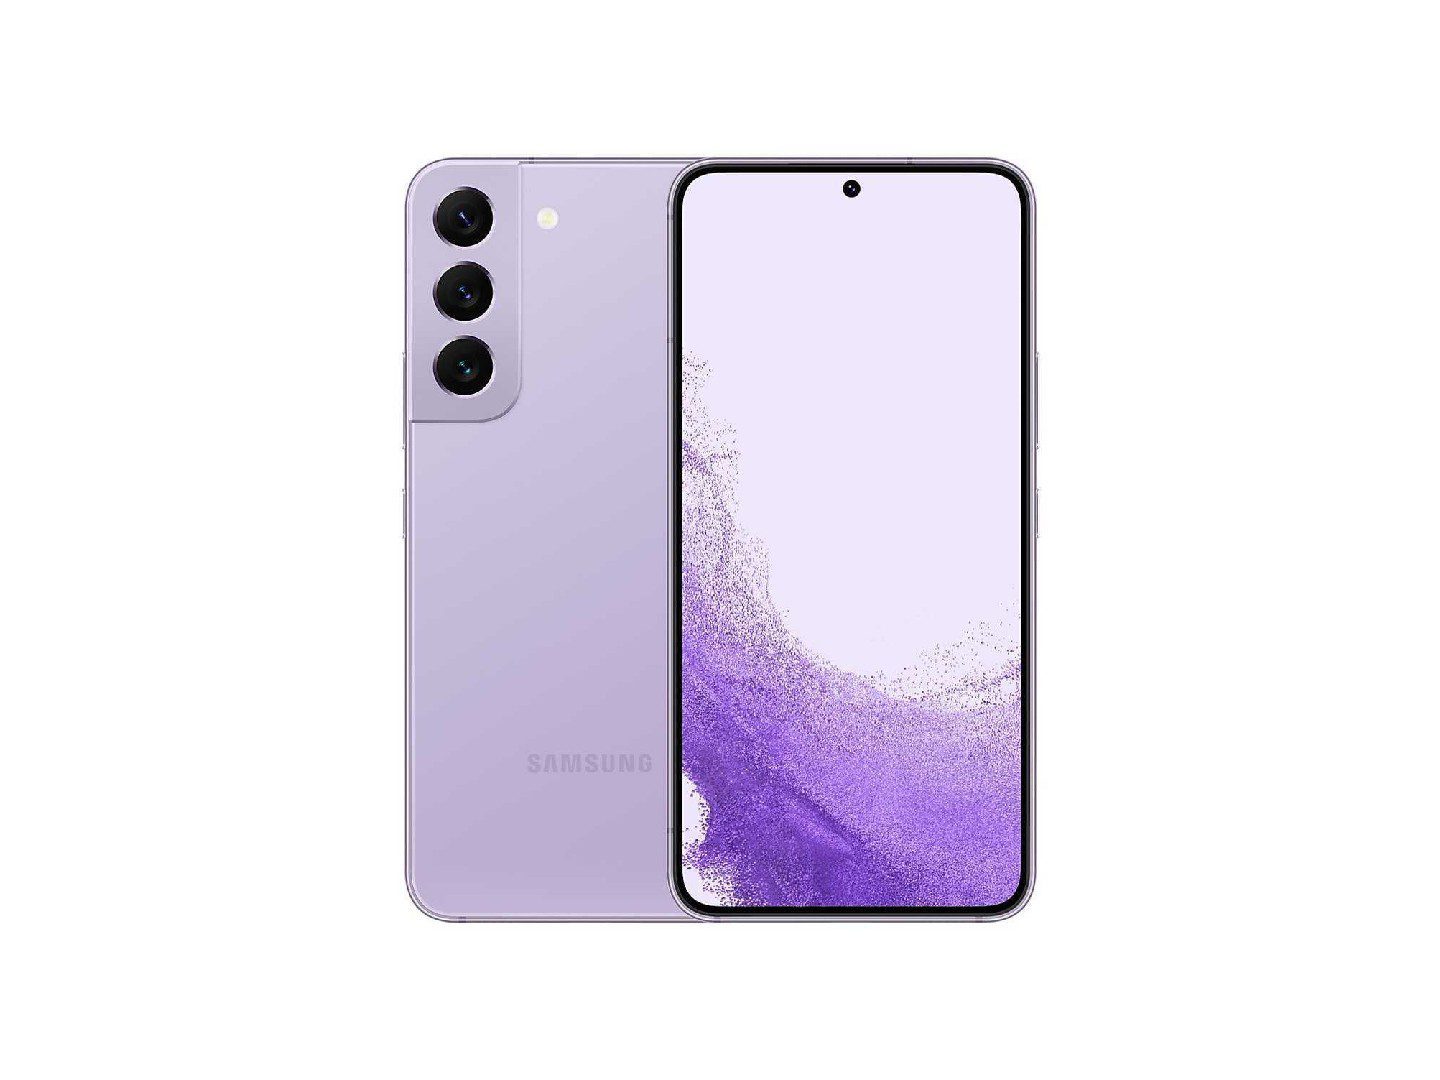 Samsung Galaxy S22 Bora Purple leak